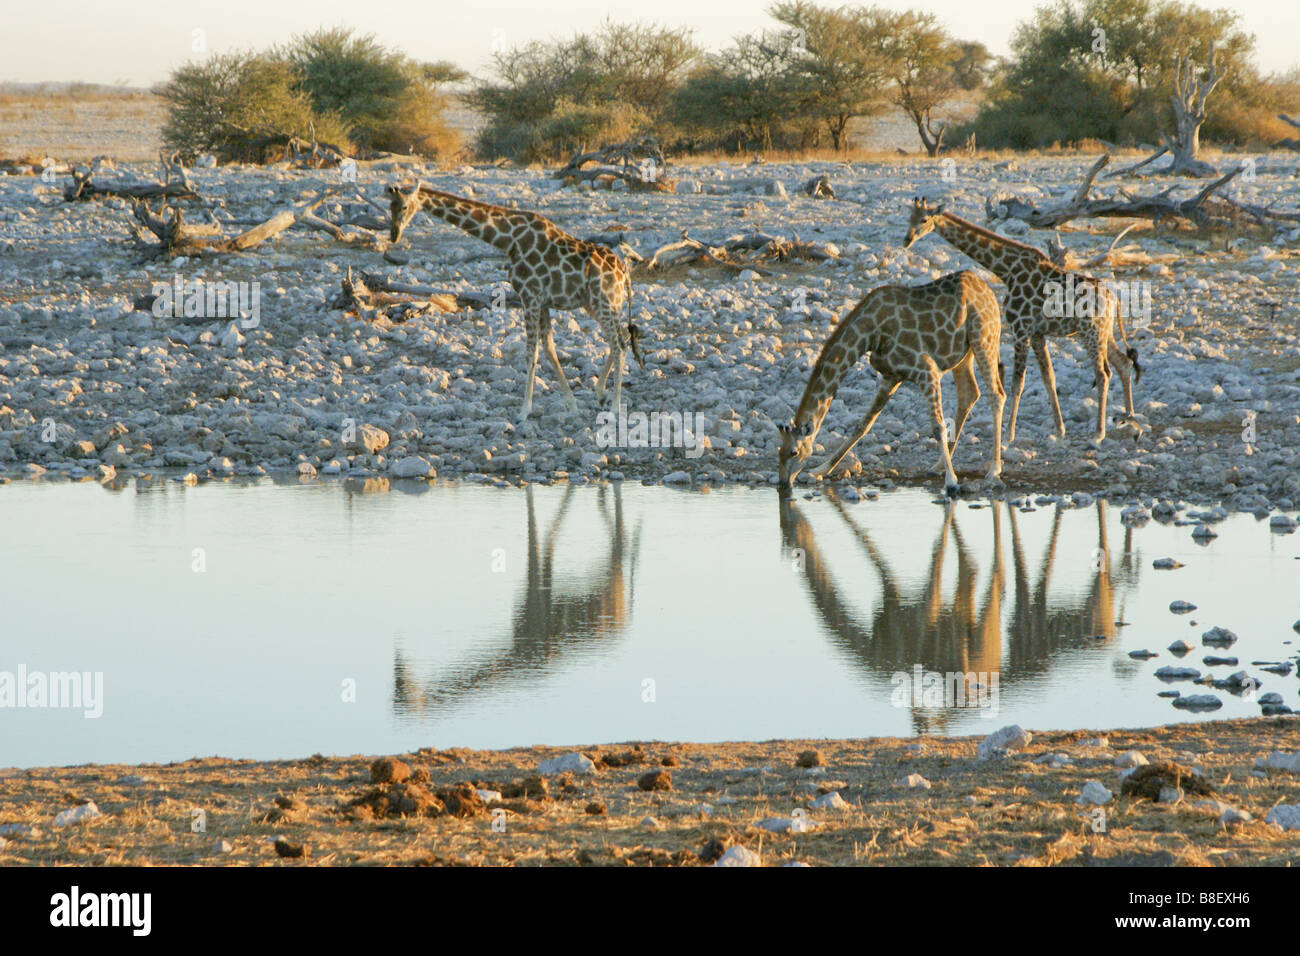 Giraffen am Wasserloch, Okaukuejo, Etosha Nationalpark, Namibia Stockfoto